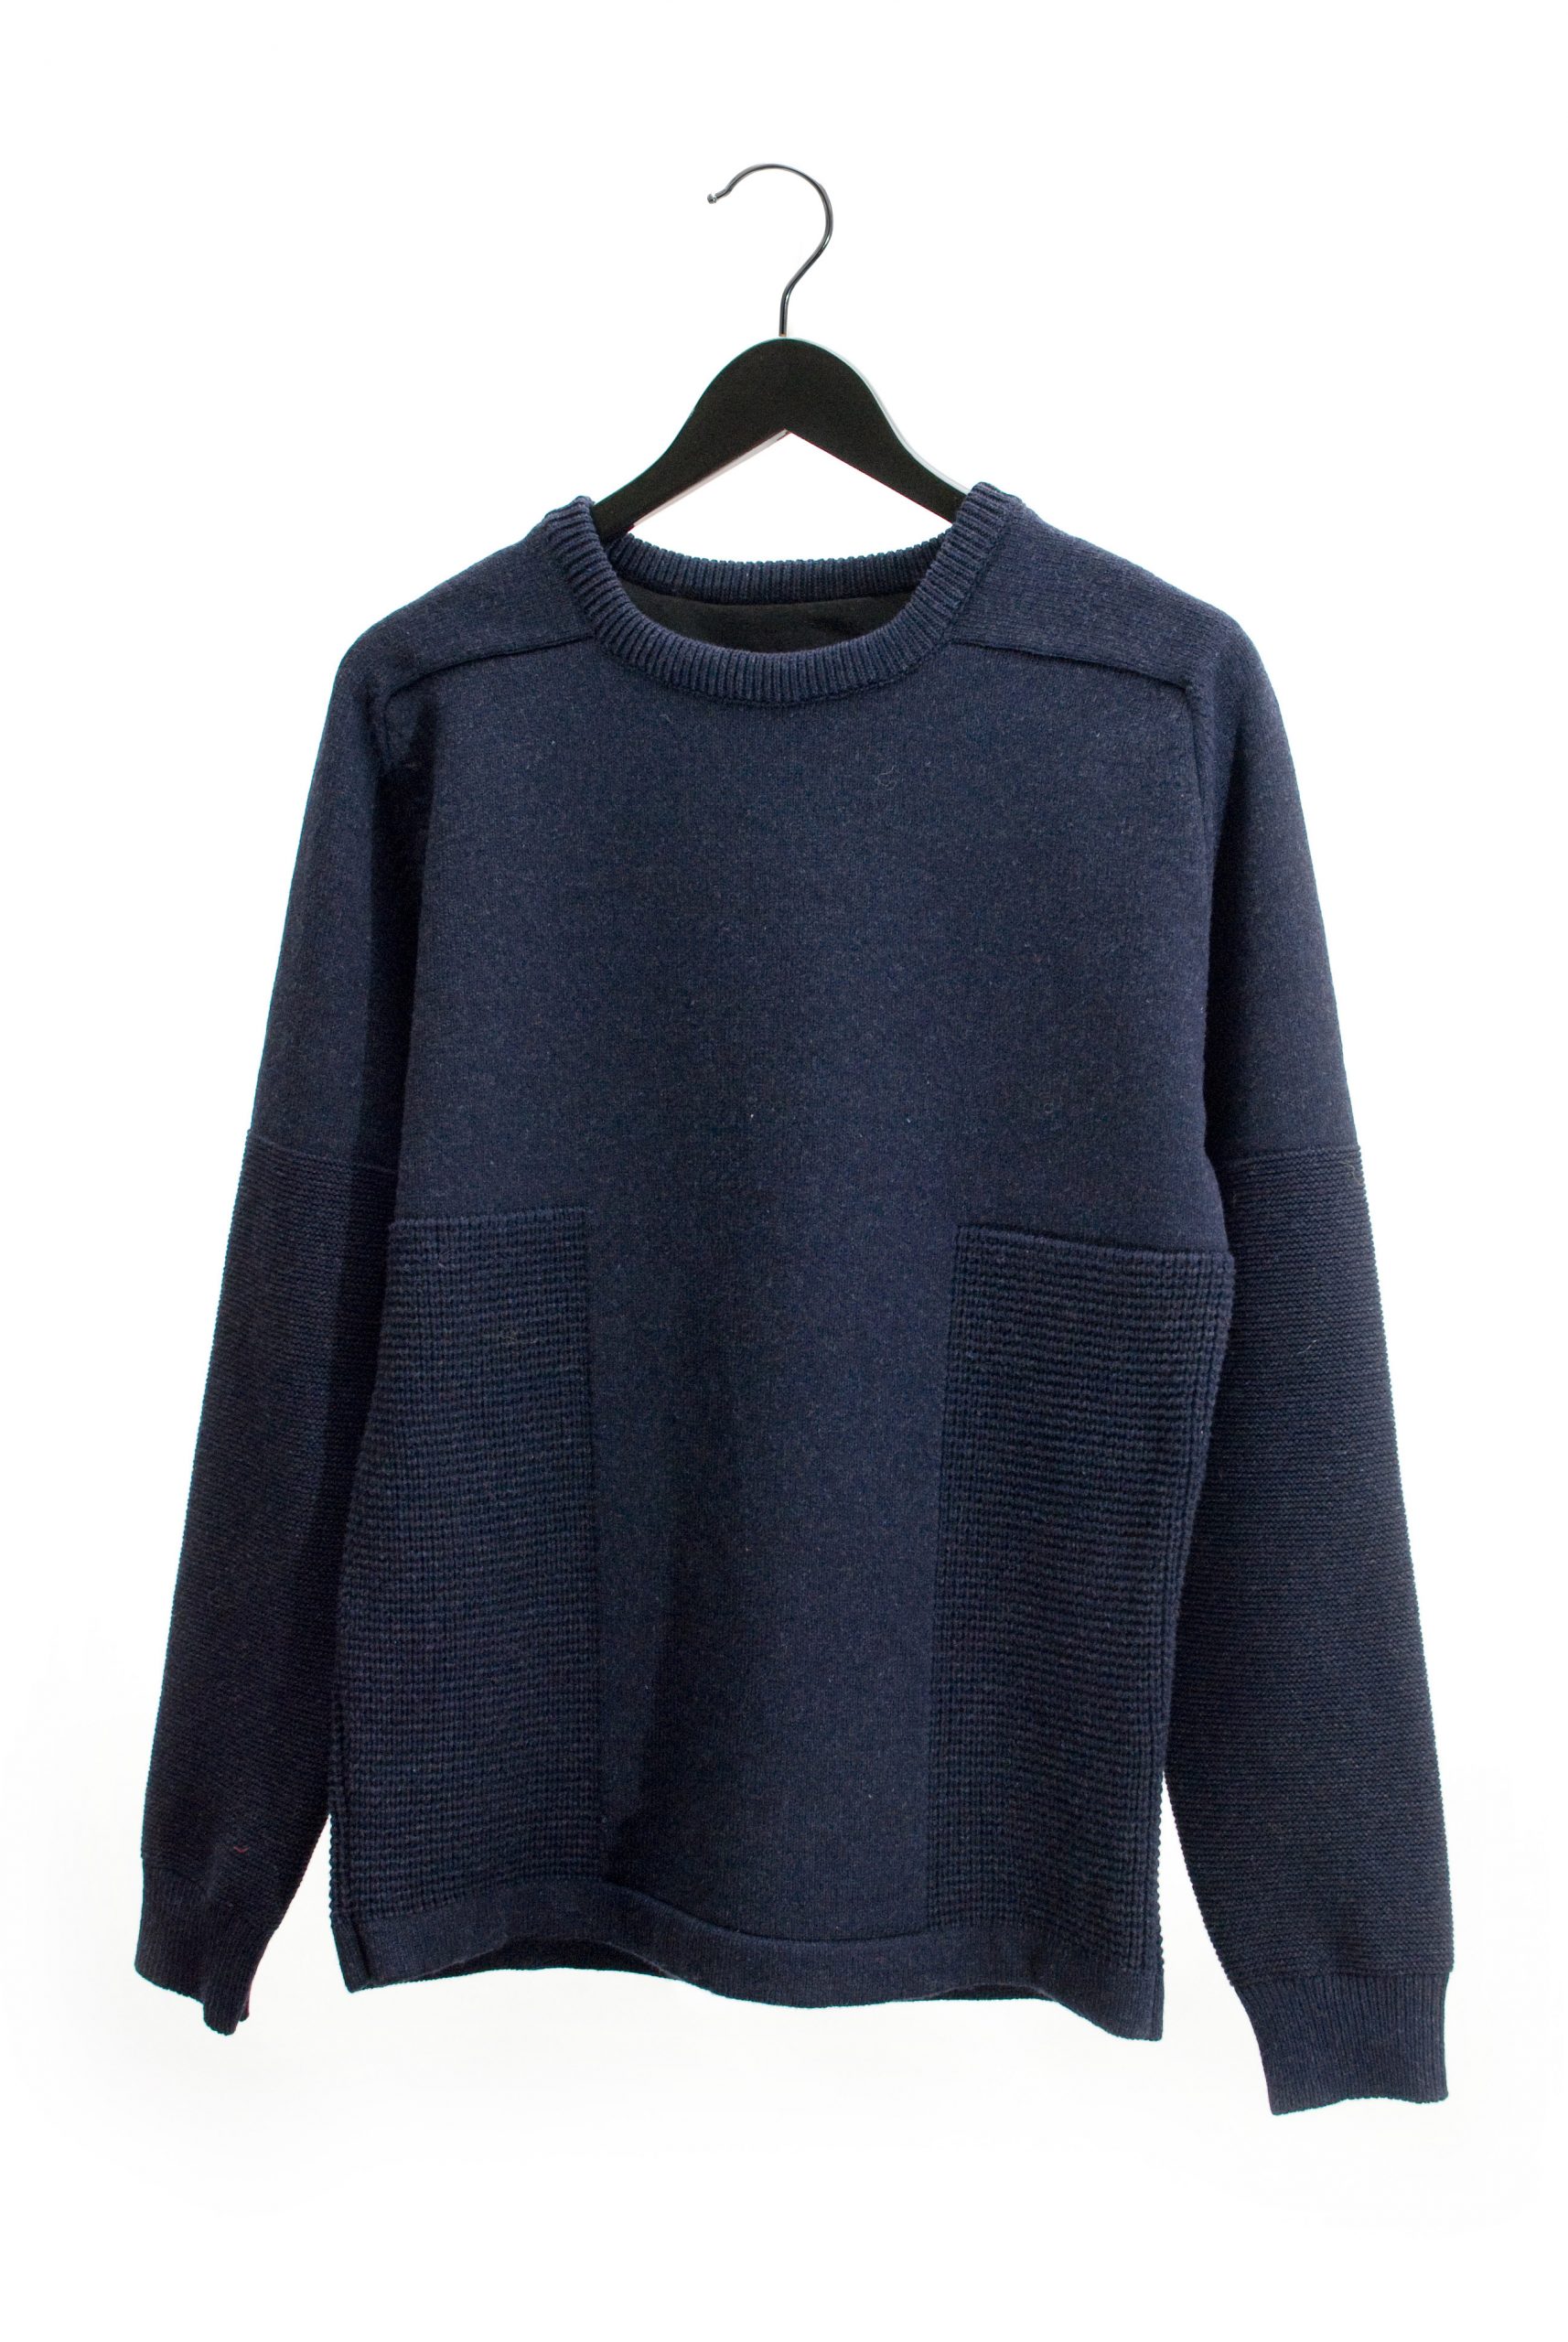 Duplikat - Sweater navy - schmidttakahashi